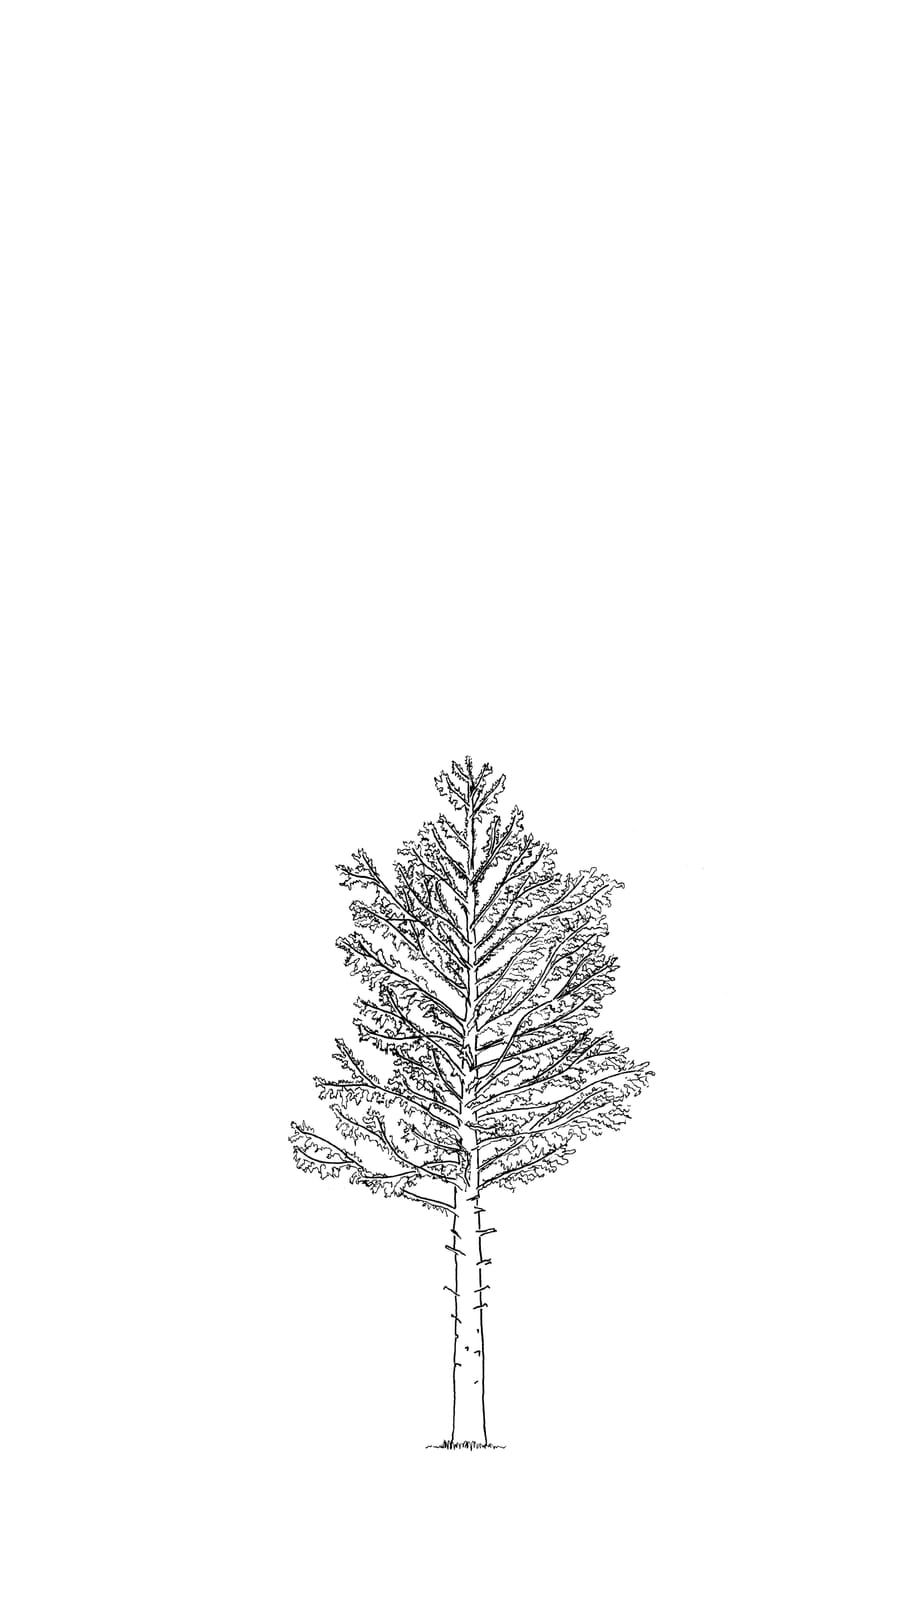 Black line sketch of a 20 year old douglas fir tree